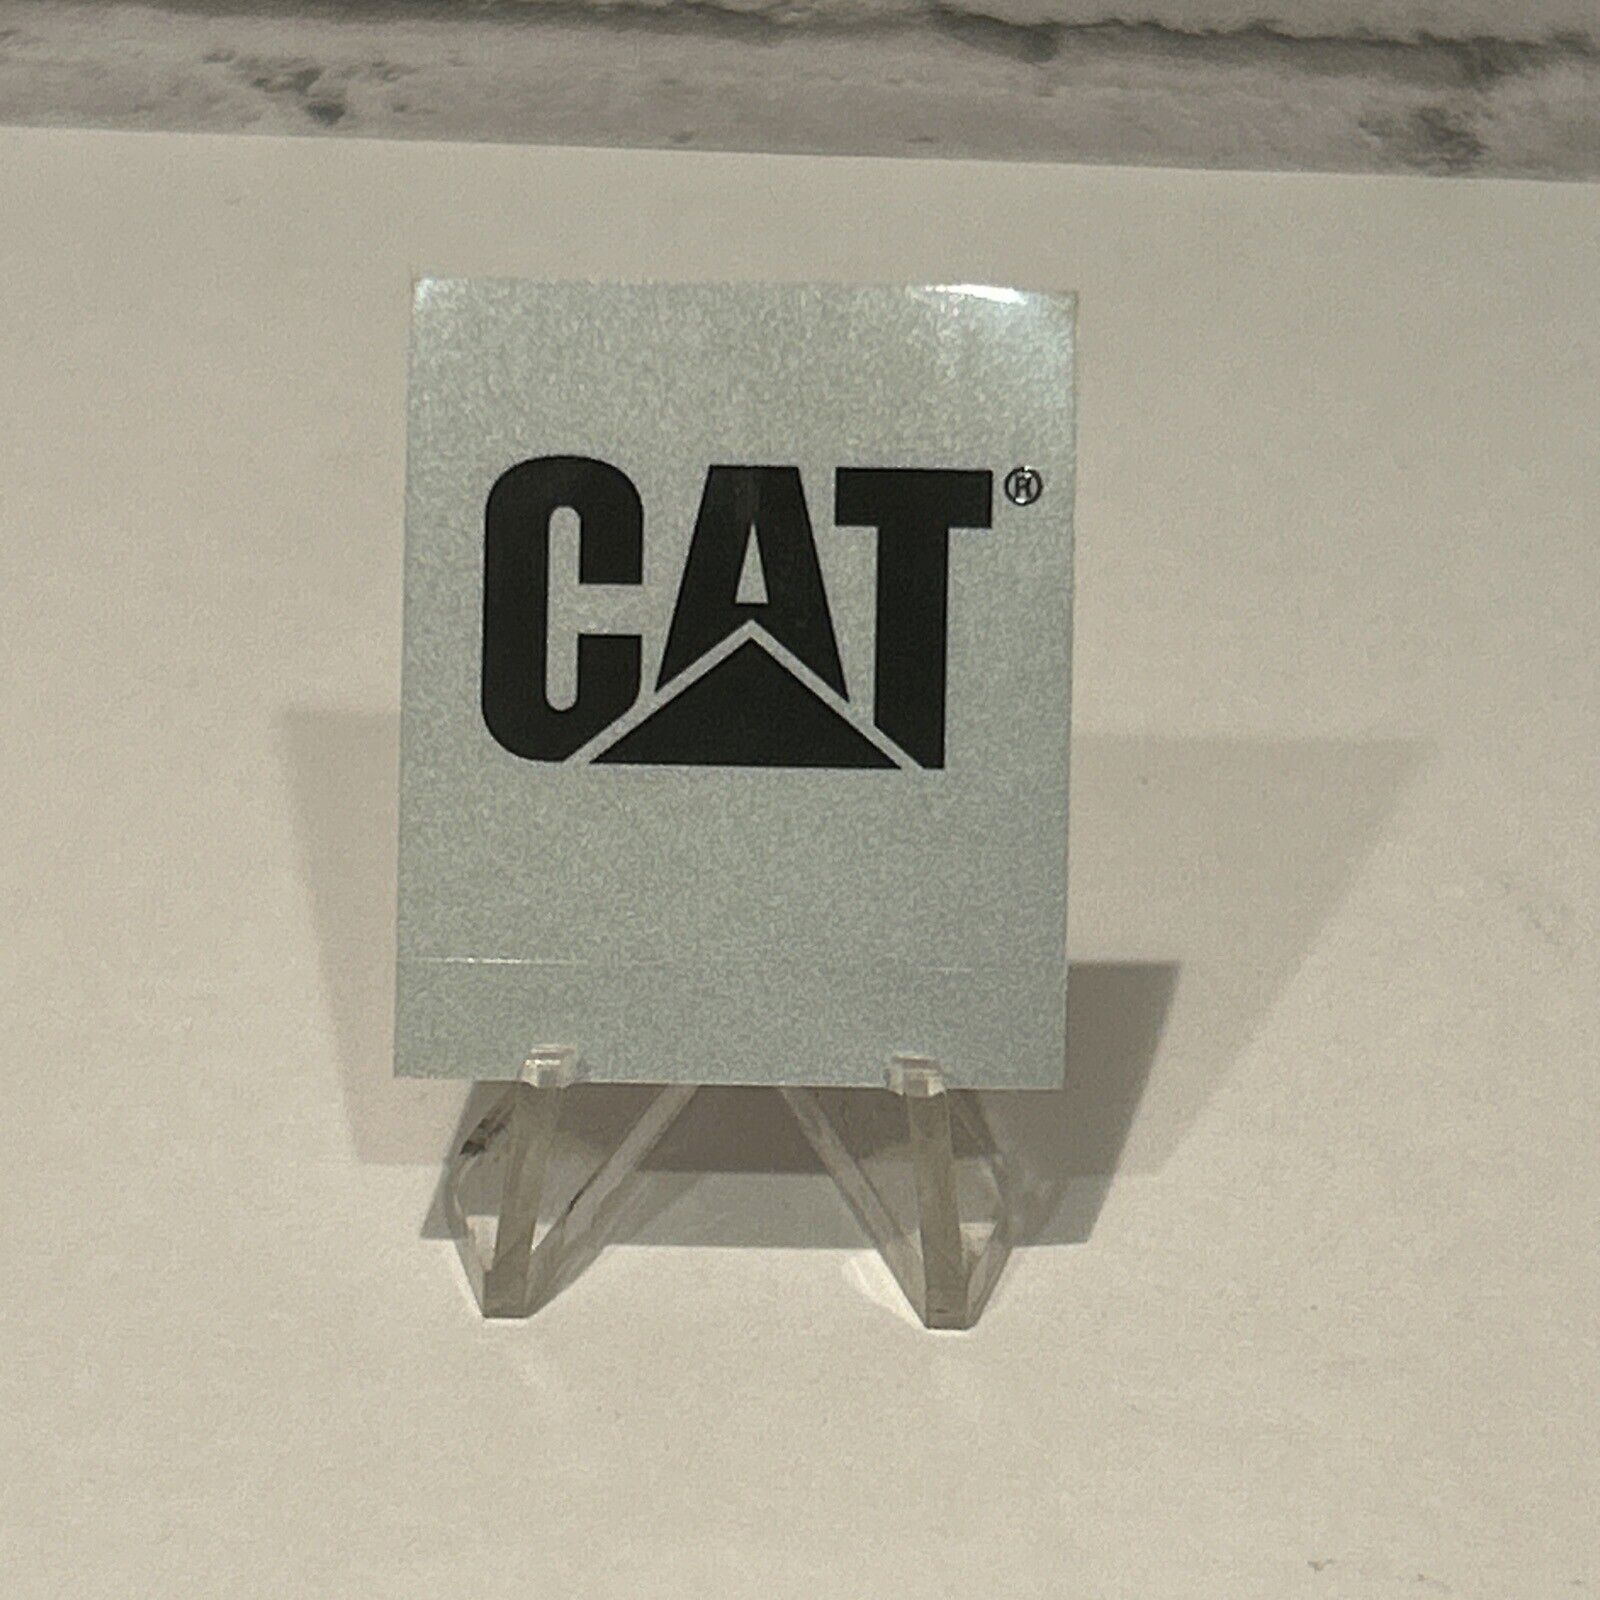 Cat Caterpillar Heavy Equipment Operating Engineers Hardhat Sticker Hard Hat